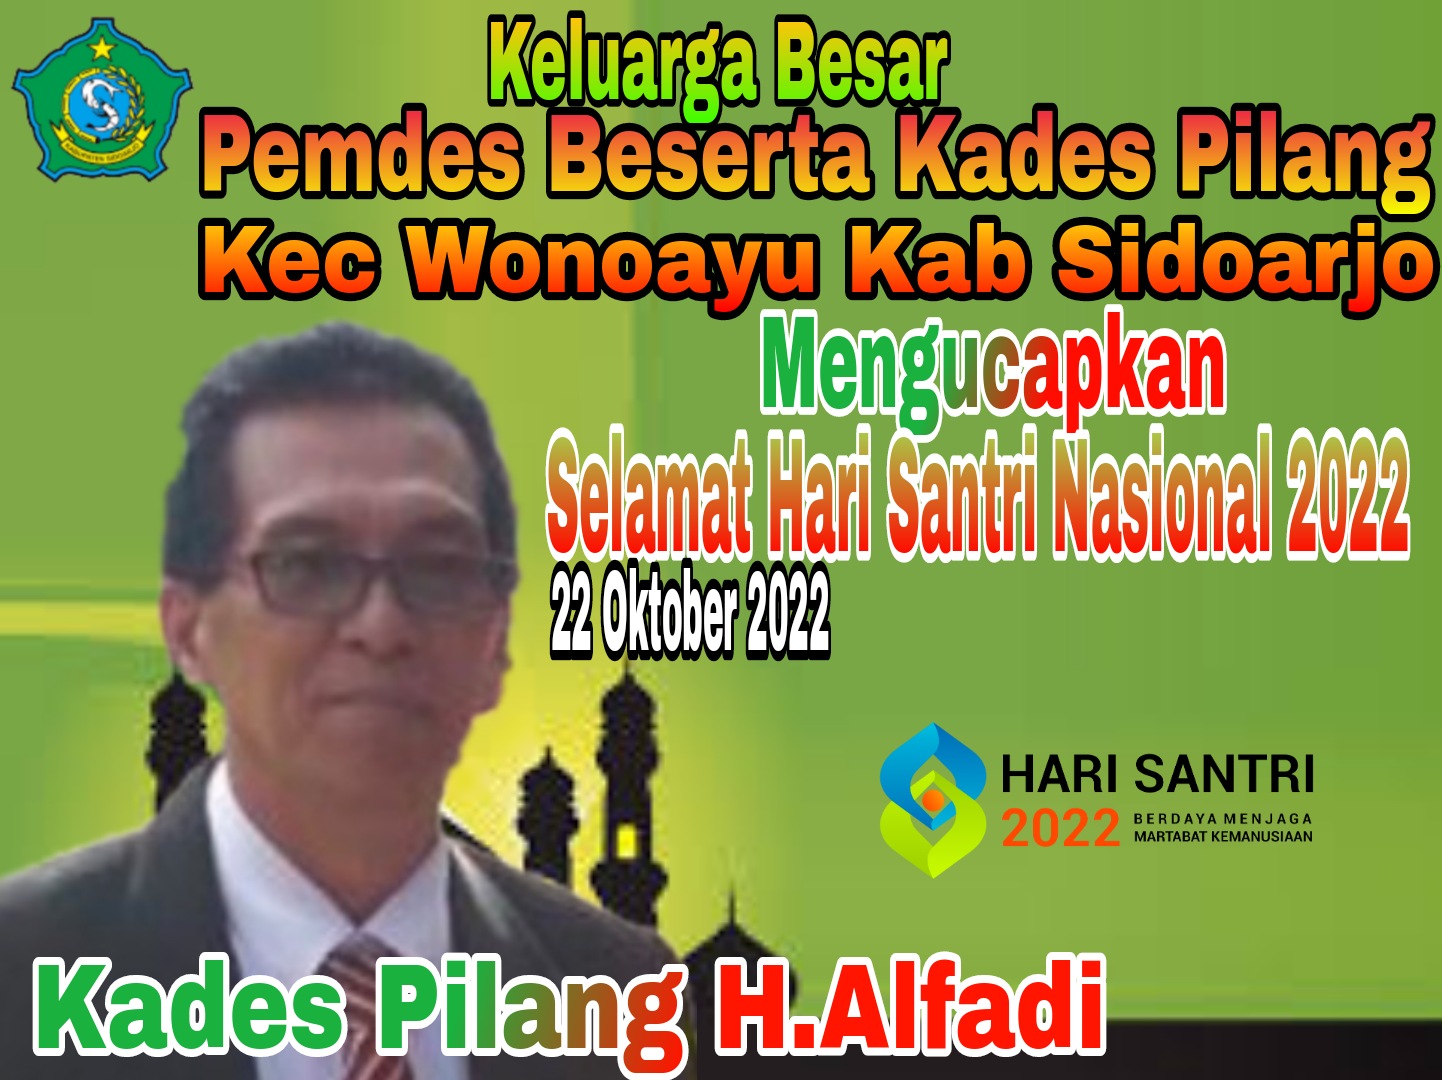 Keluarga Besar Pemdes Beserta Kades Pilang Kec Wonoayu Kab Sidoarjo Mengucapkan Selamat Hari Santri Nasional 22 Oktober 2022